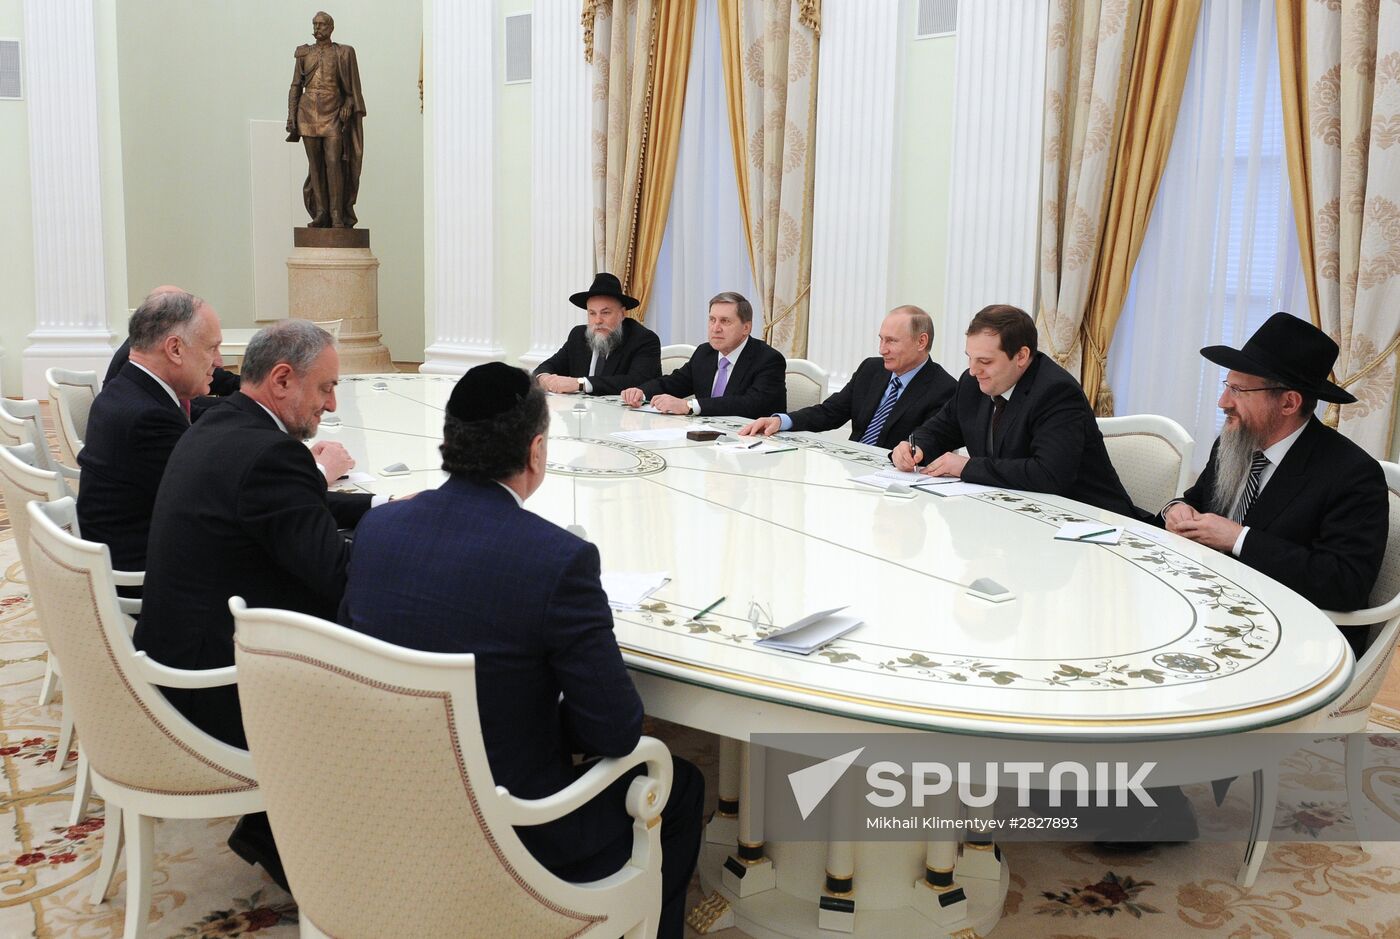 President Vladimir Putin meets with World Jewish Congress President Ronald S. Lauder